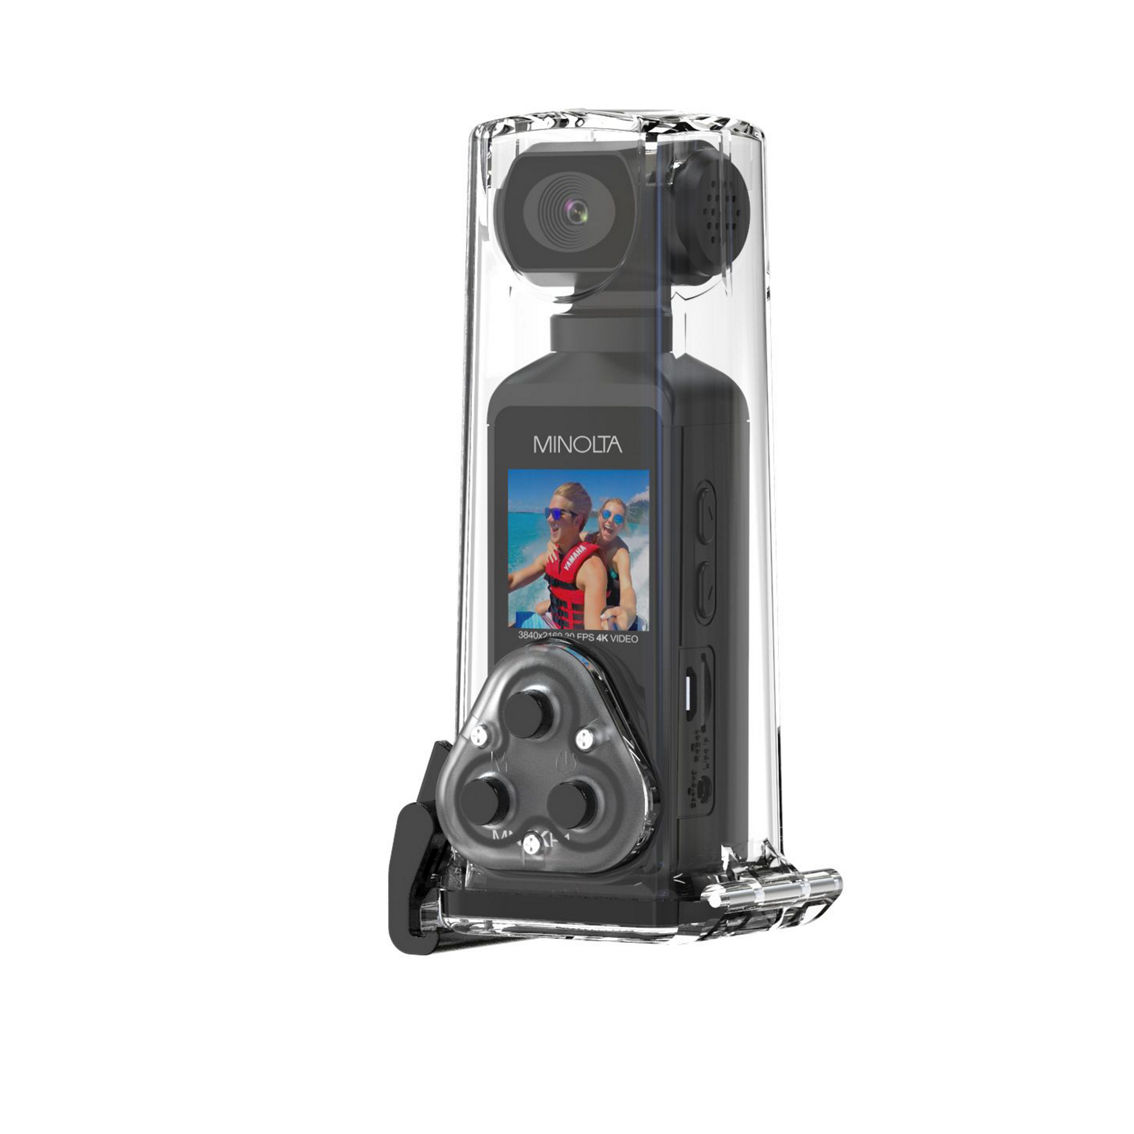 Minolta MN4KP1 4K Ultra HD Pocket Camcorder with WiFi & Waterproof Case - Image 4 of 4